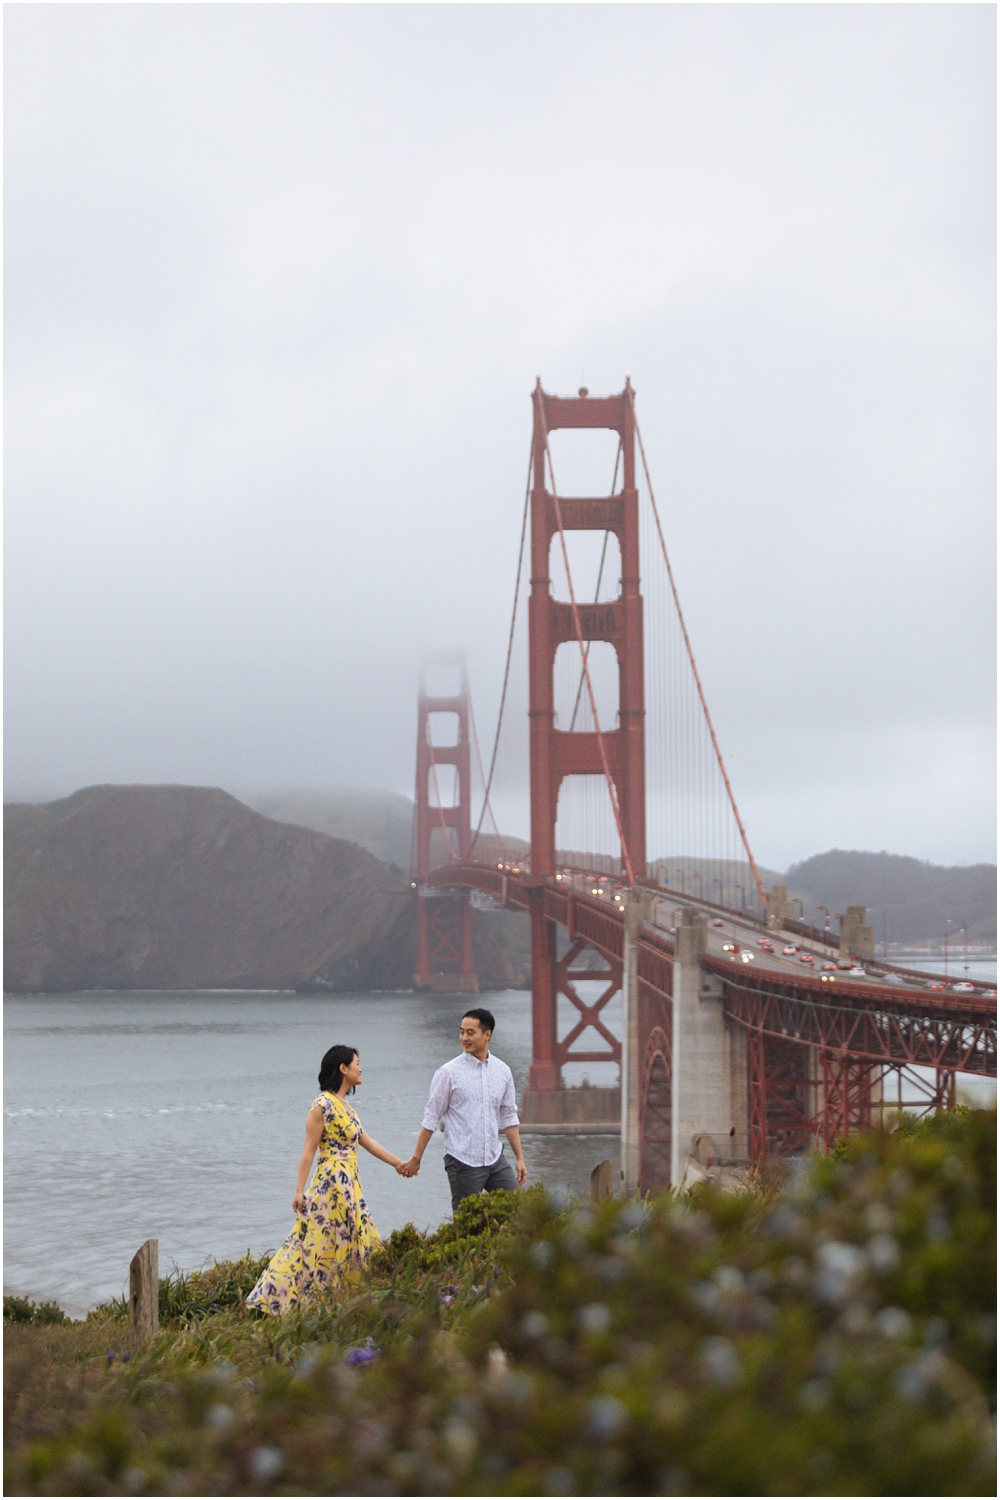 Golden Gate Bridge Overlook, San Francisco Engagement Photo Location